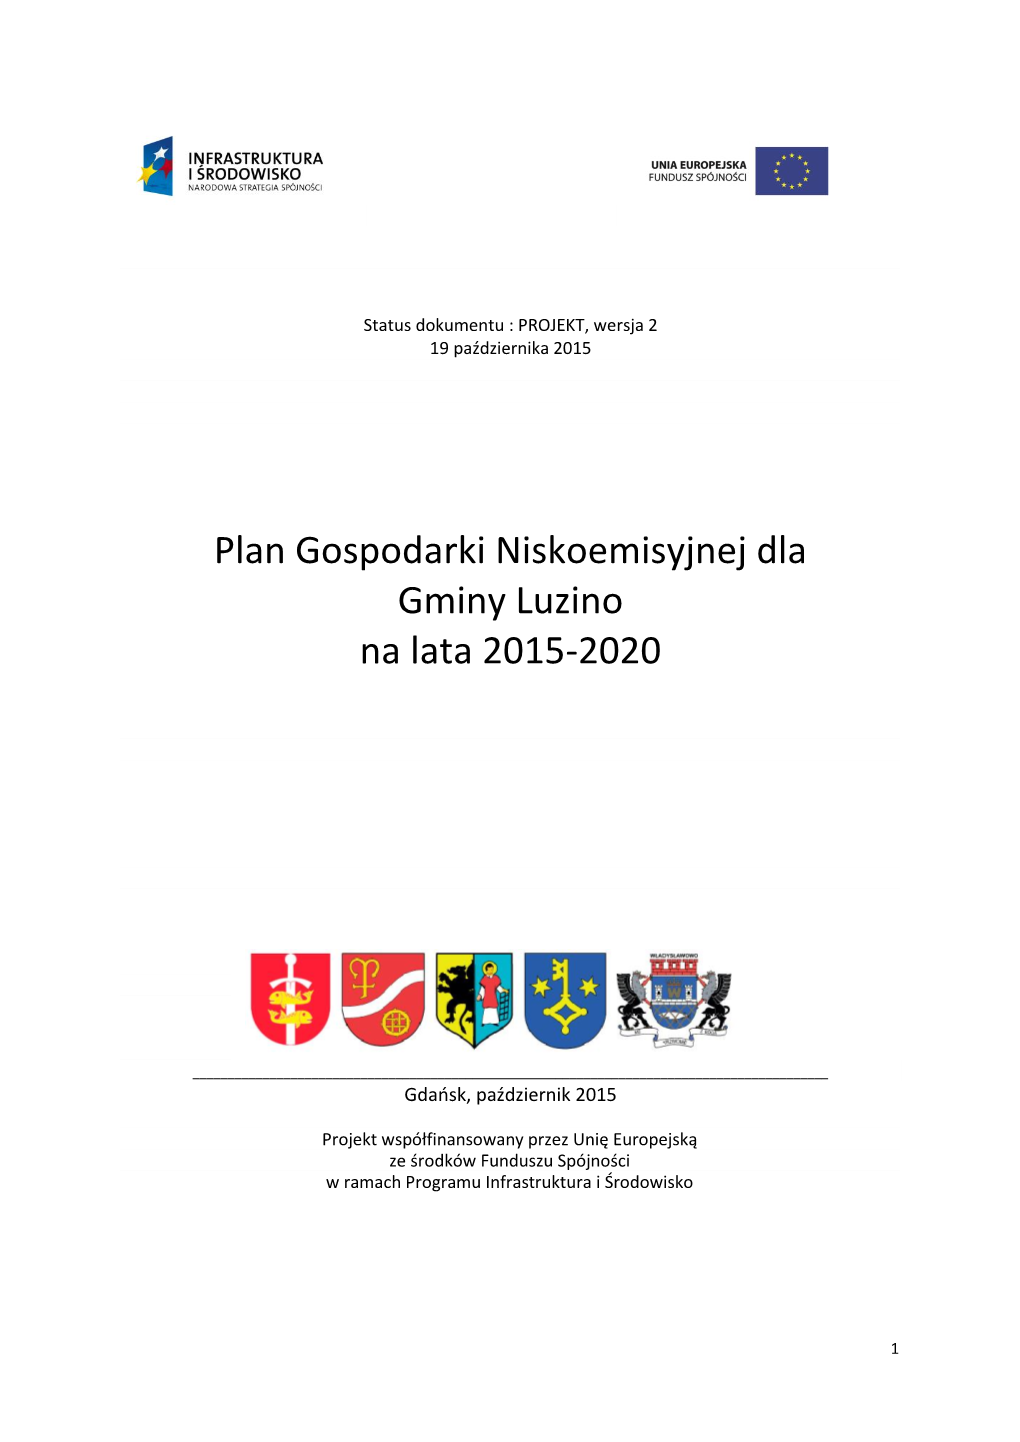 Plan Gospodarki Niskoemisyjnej Dla Gminy Luzino Na Lata 2015-2020